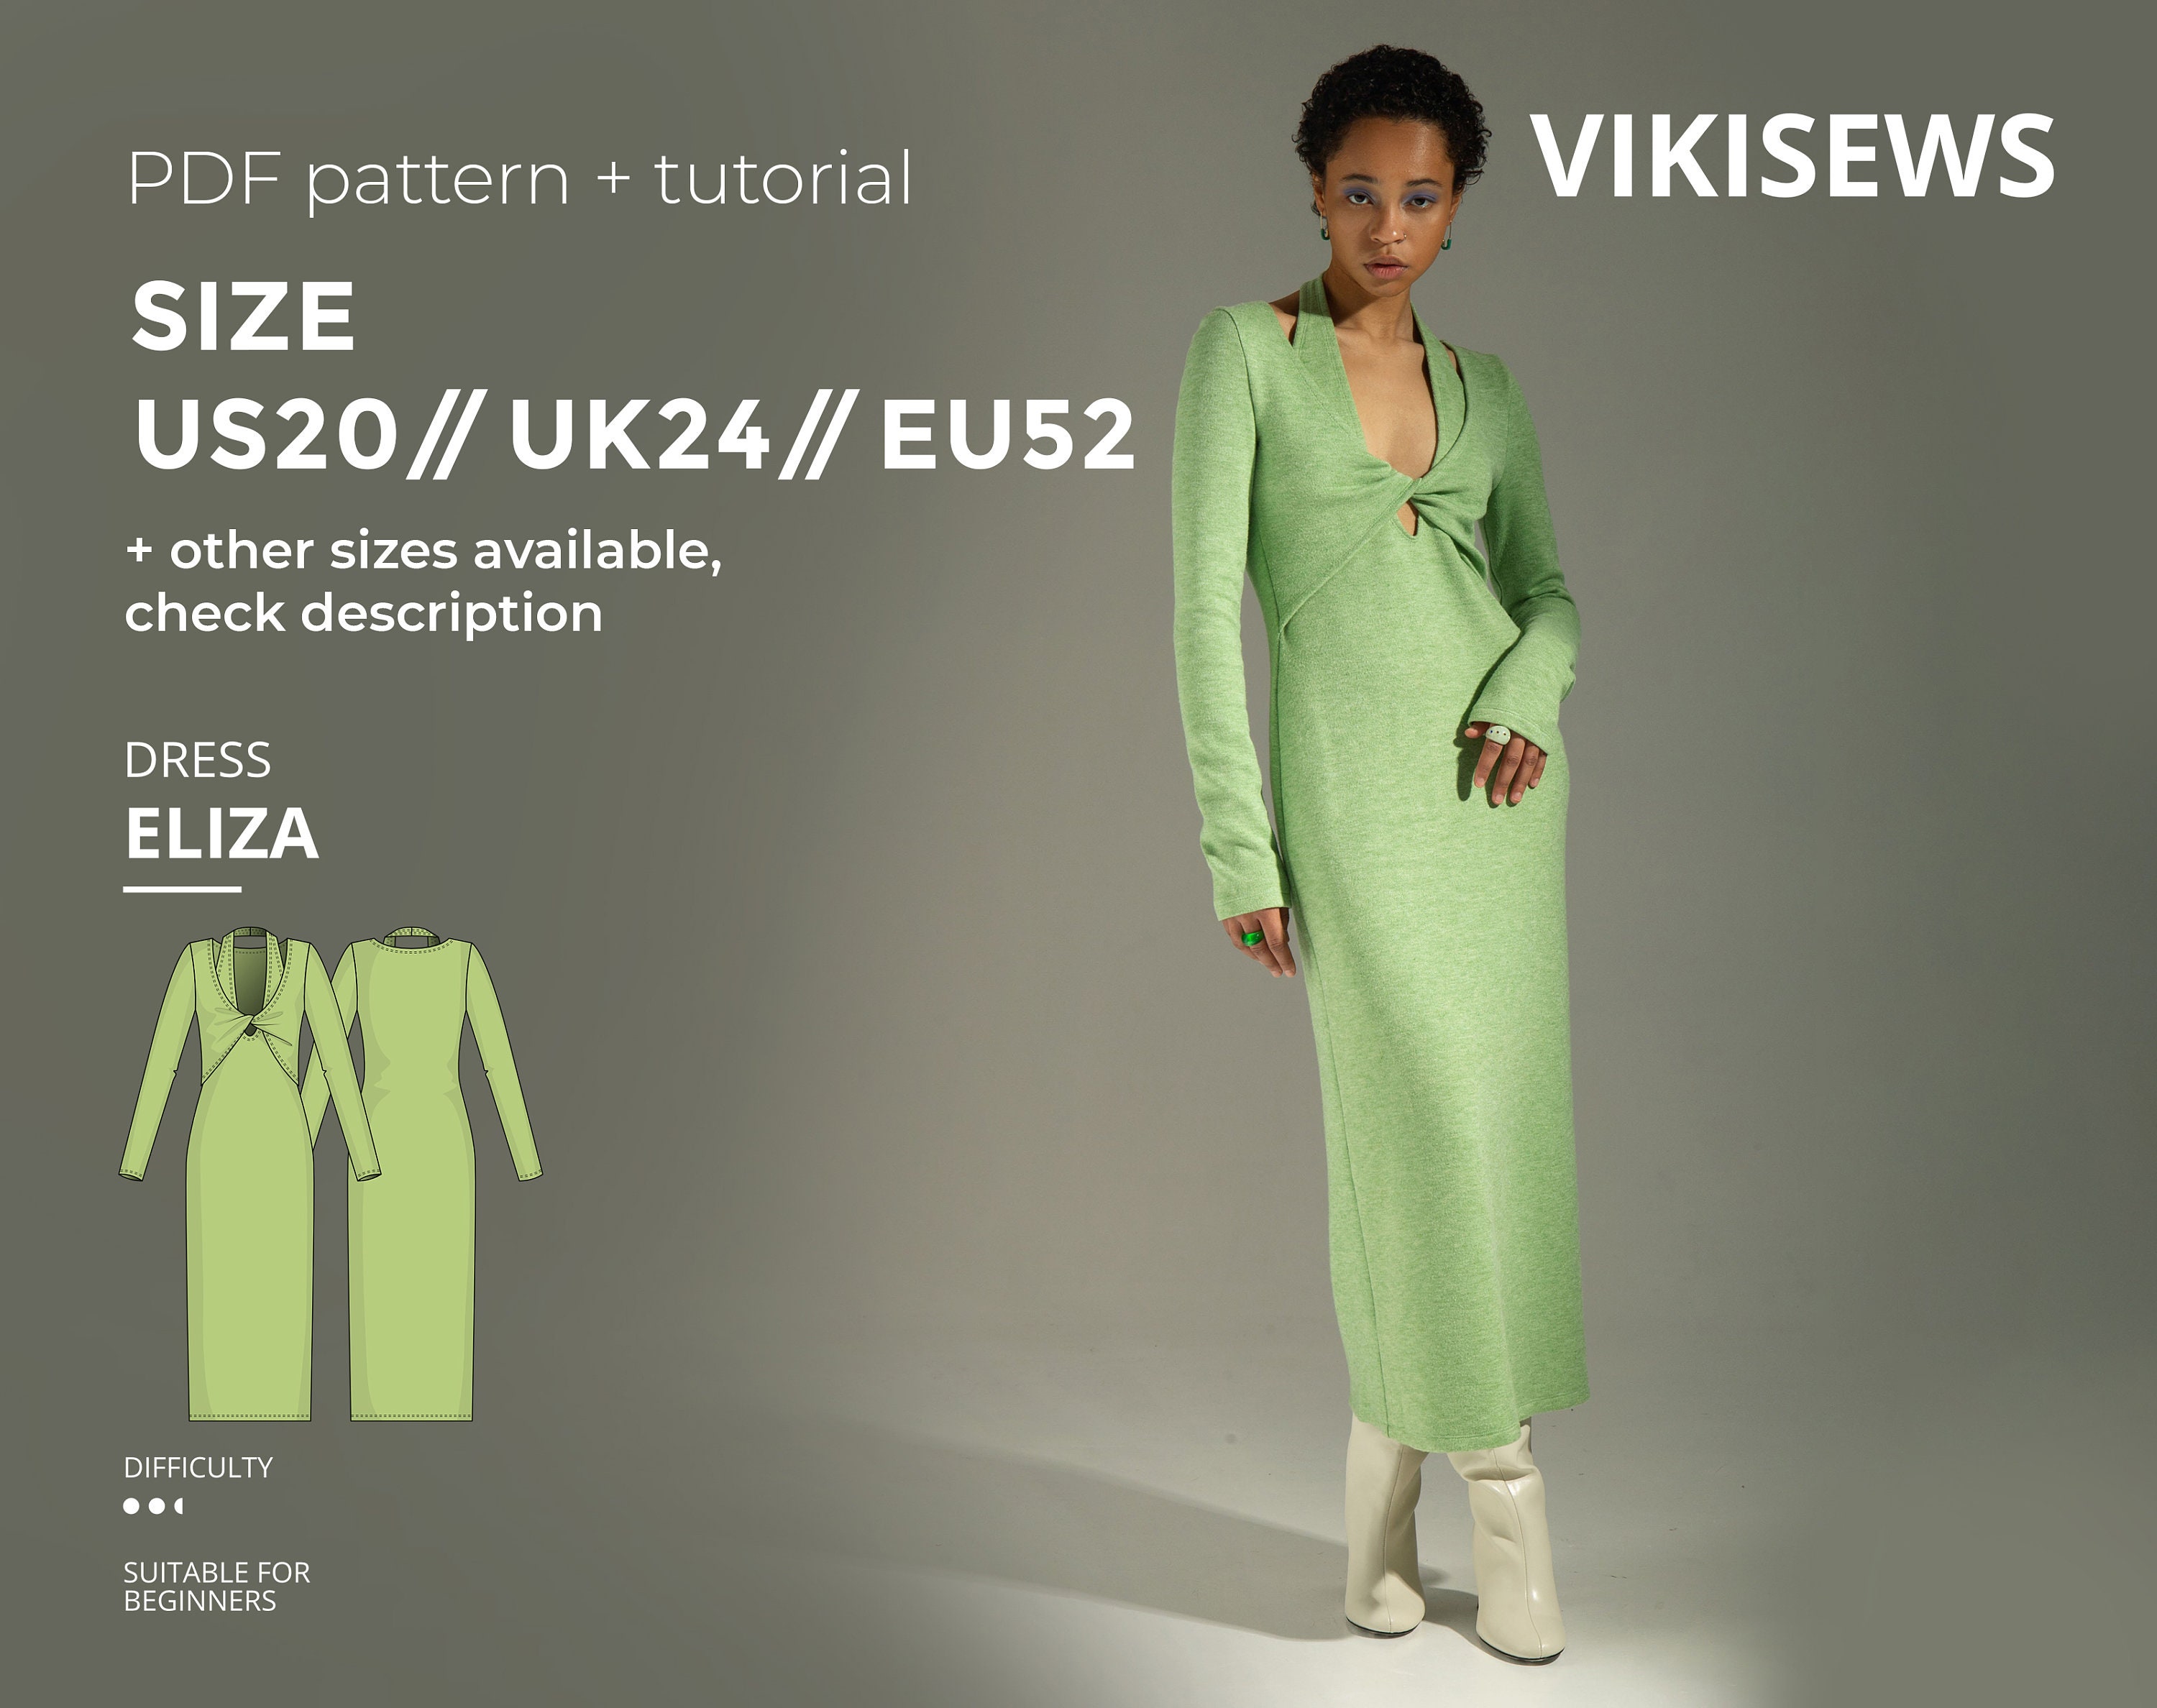 Eliza dress pattern with pdf tutorial size US 20 UK 24 EU 52